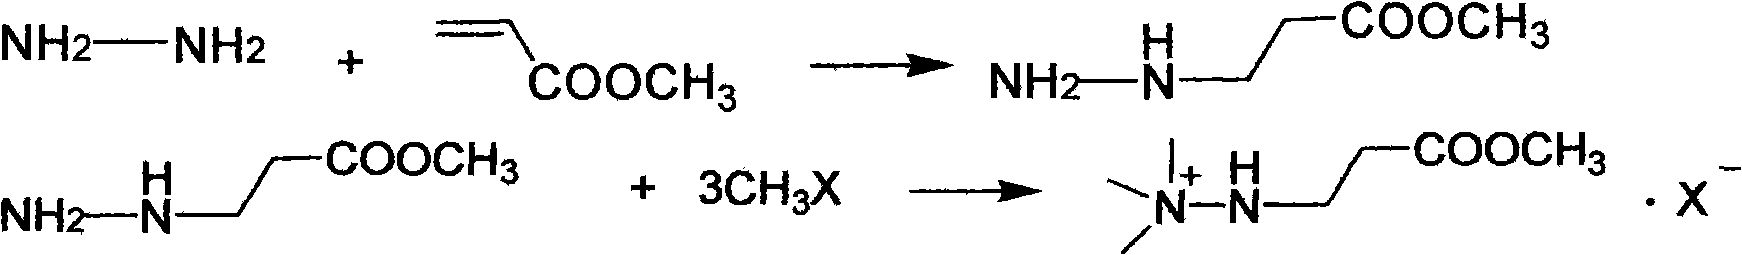 Preparation method of Mildronate intermediate